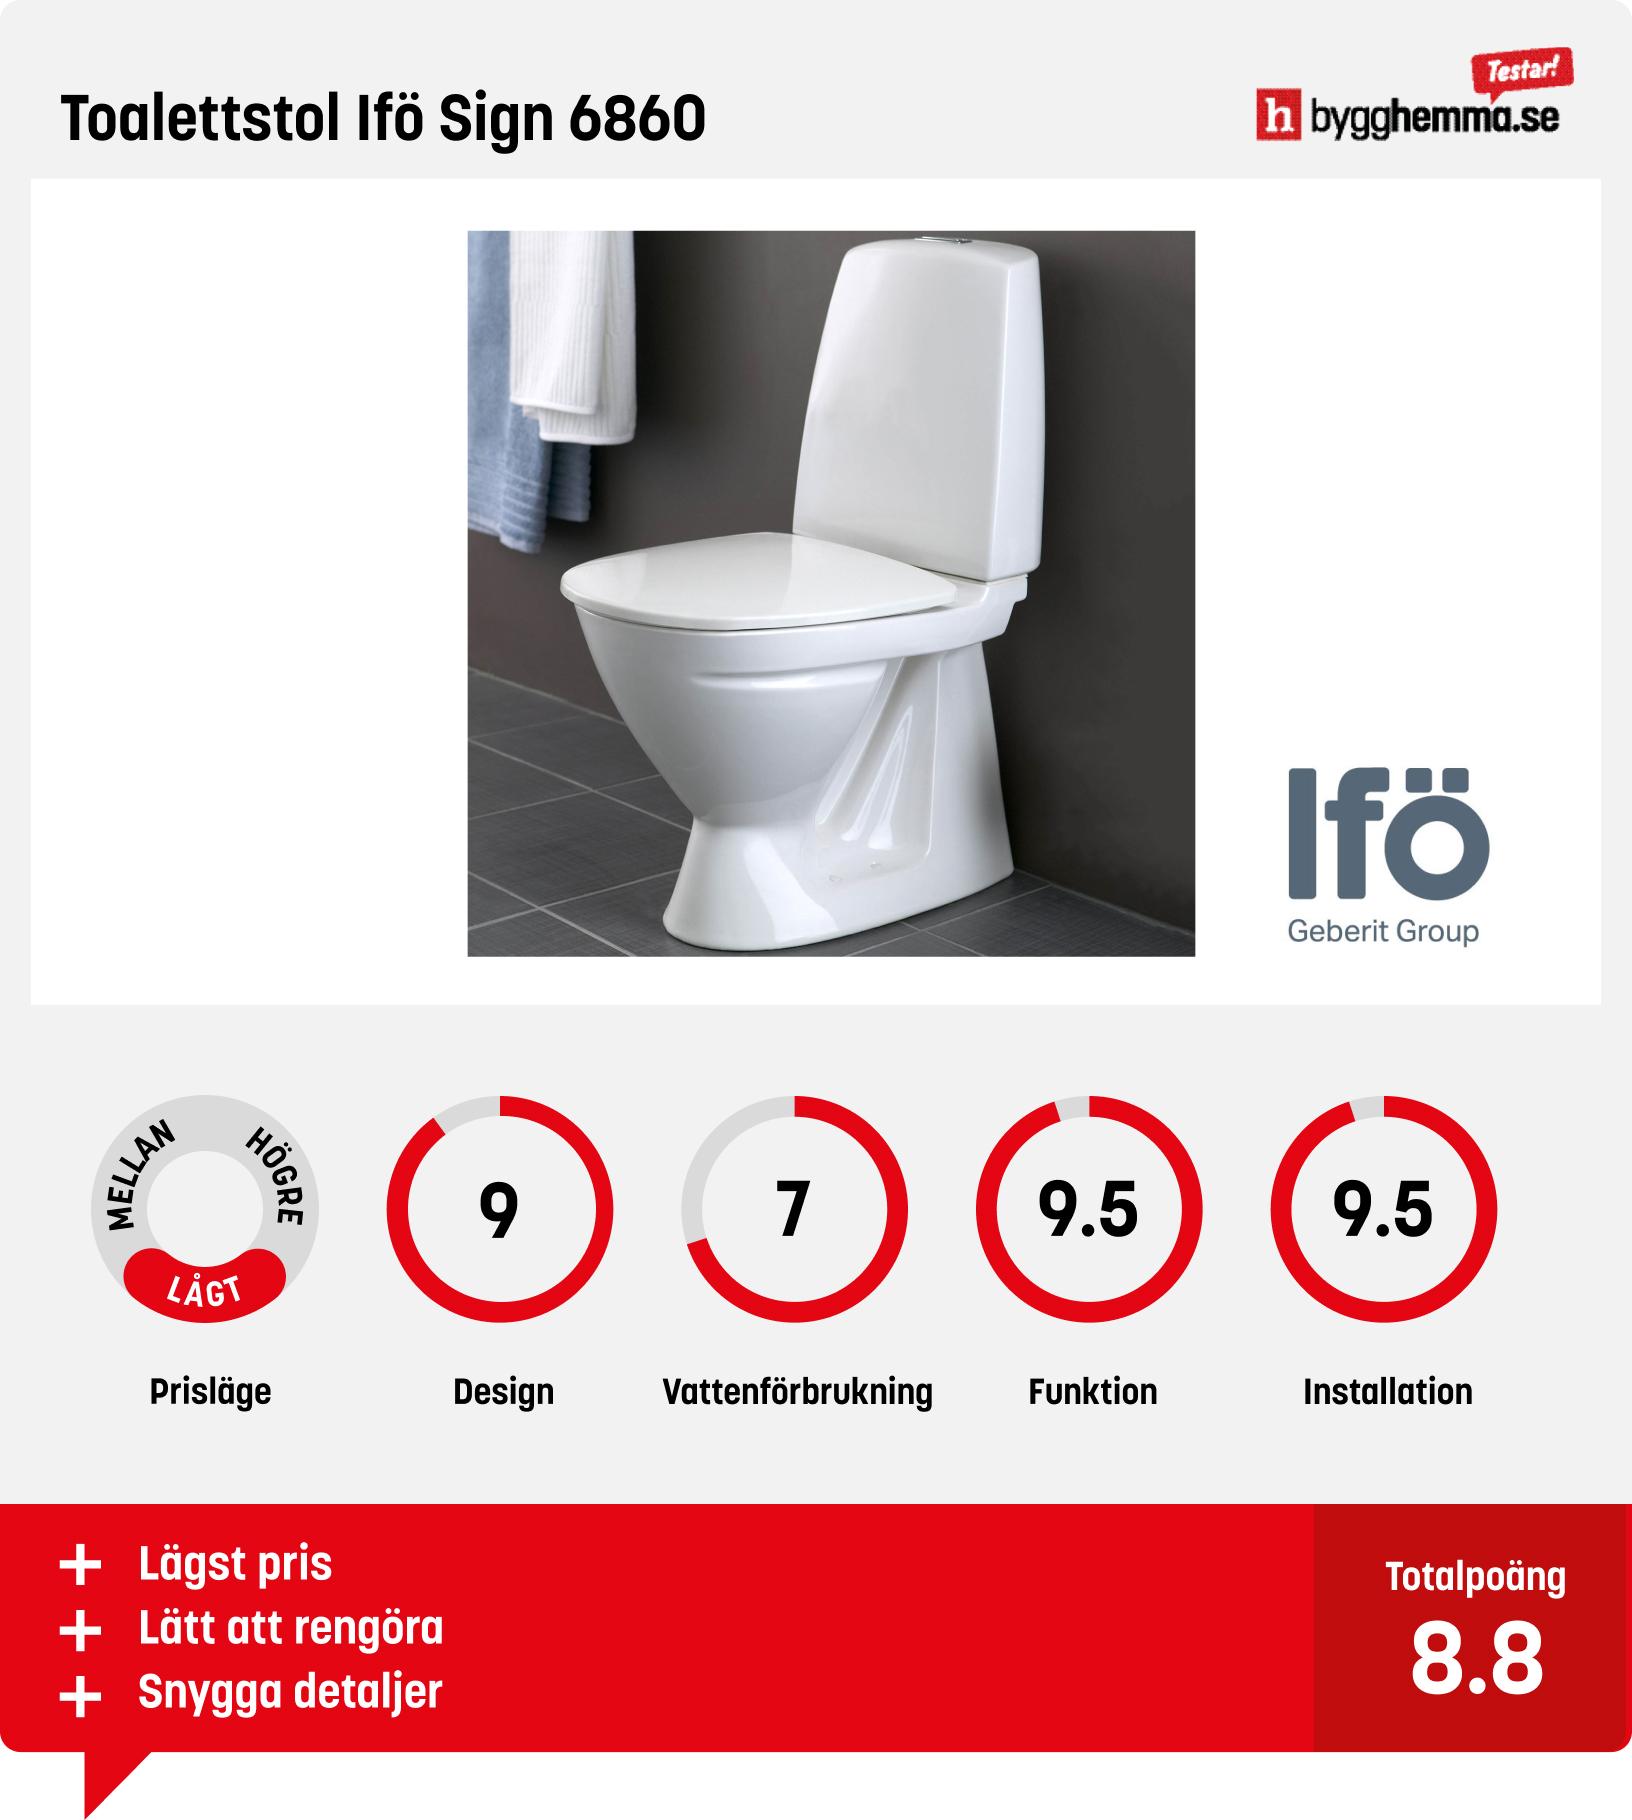 Snålspolande toalett bäst i test - Toalettstol Ifö Sign 6860